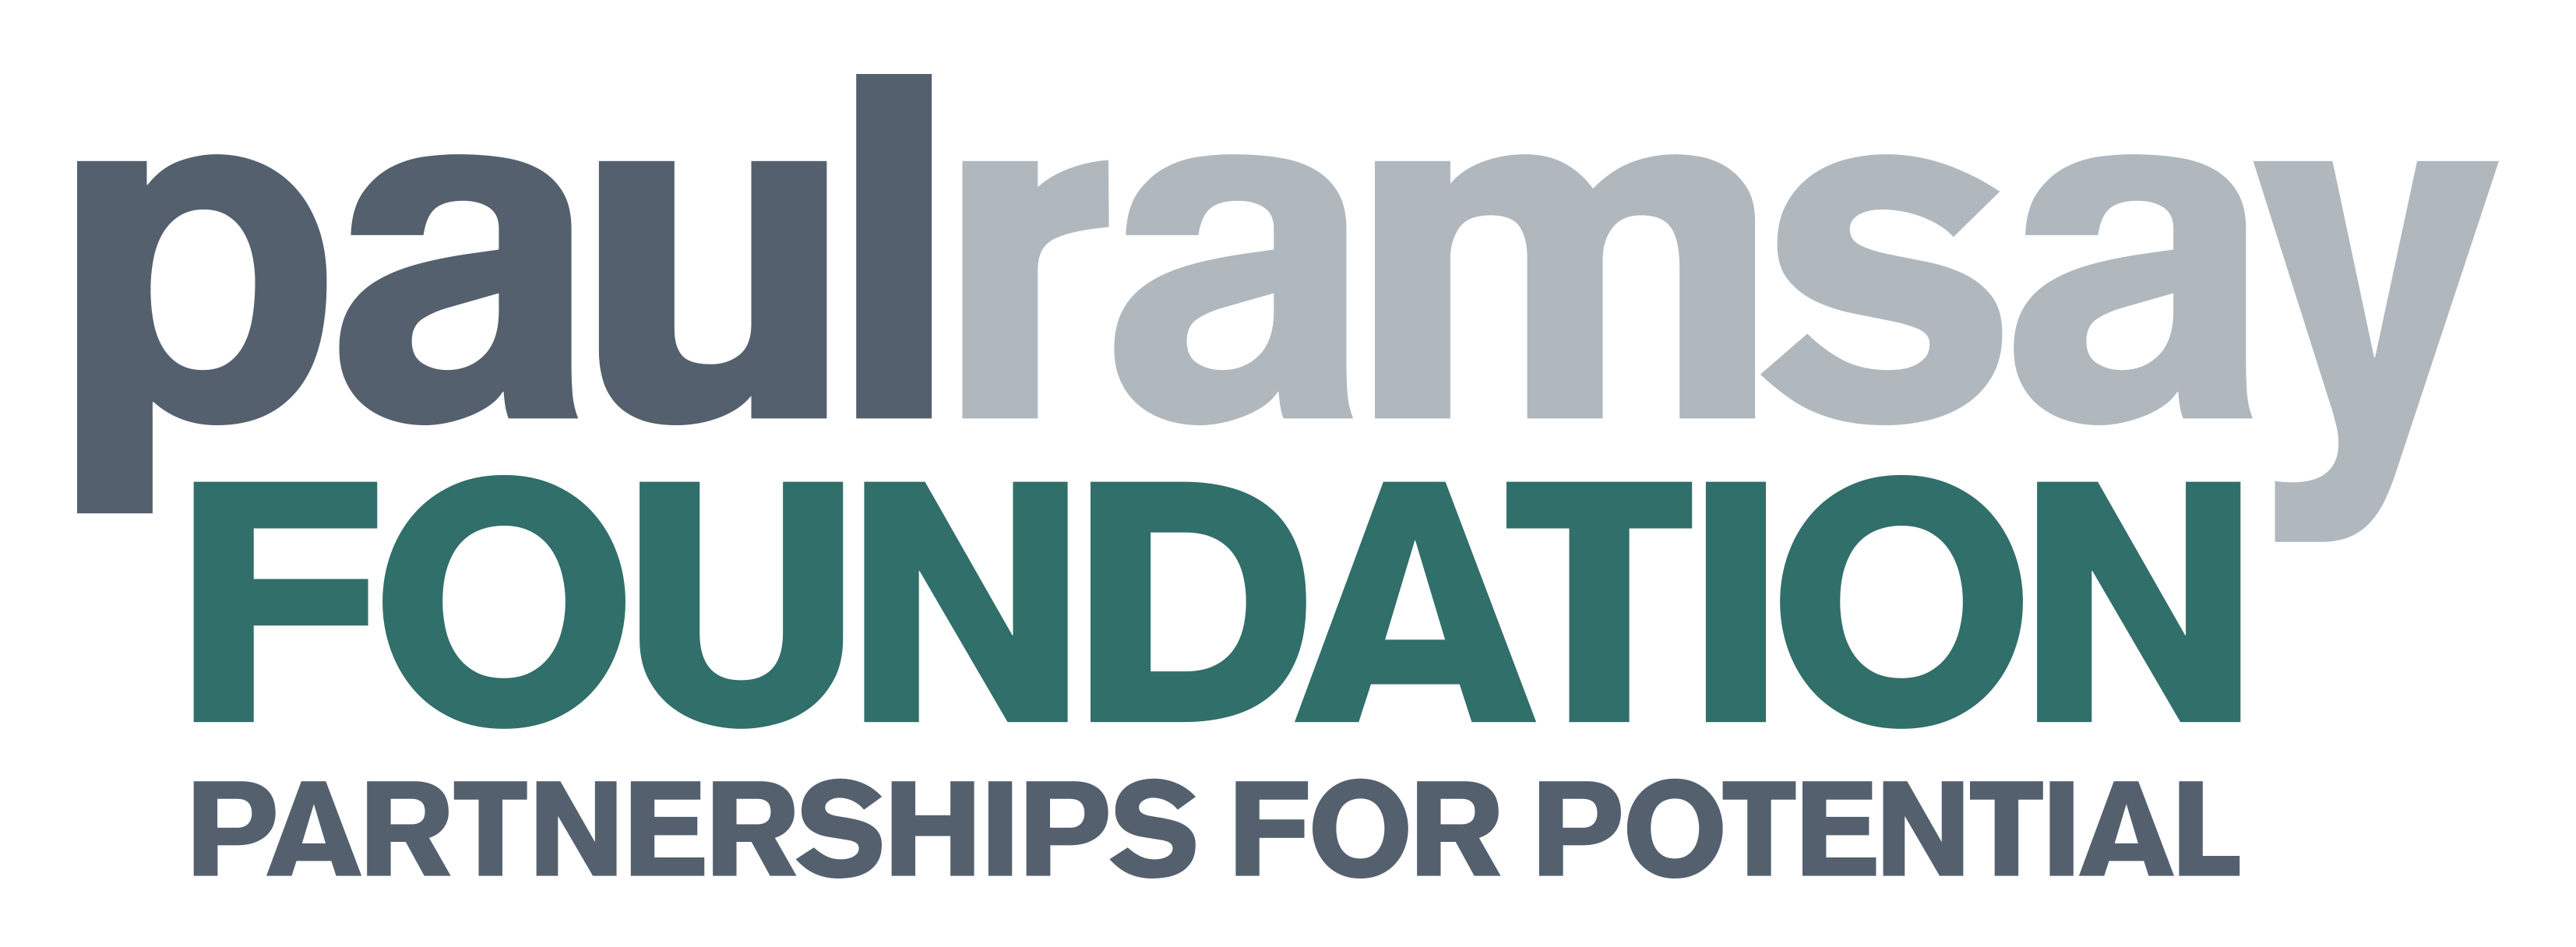 Paul Ramsay Foundation logo links to website